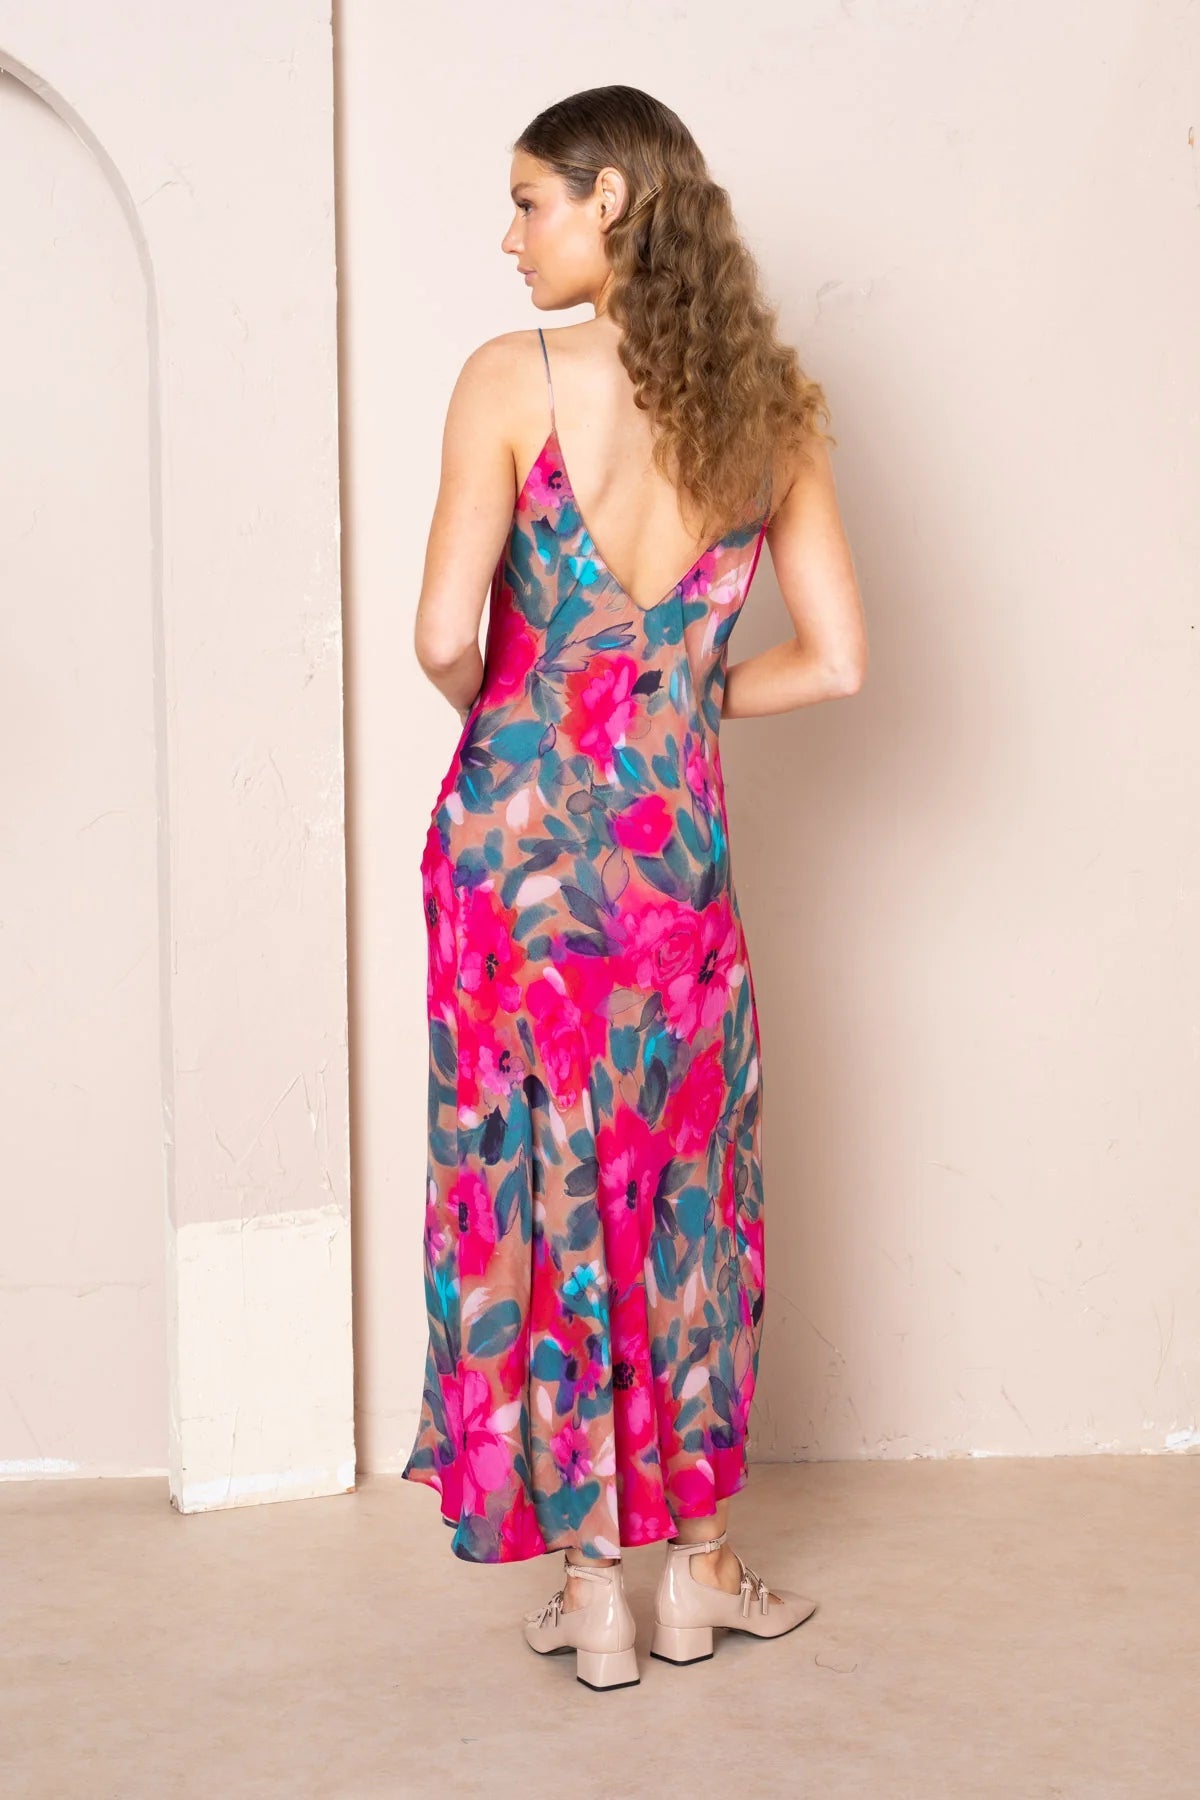 KACHEL MARILYN MAXI SLIP DRESS - Pinkhill, Darwin boutique, Australian high end fashion, Darwin Fashion